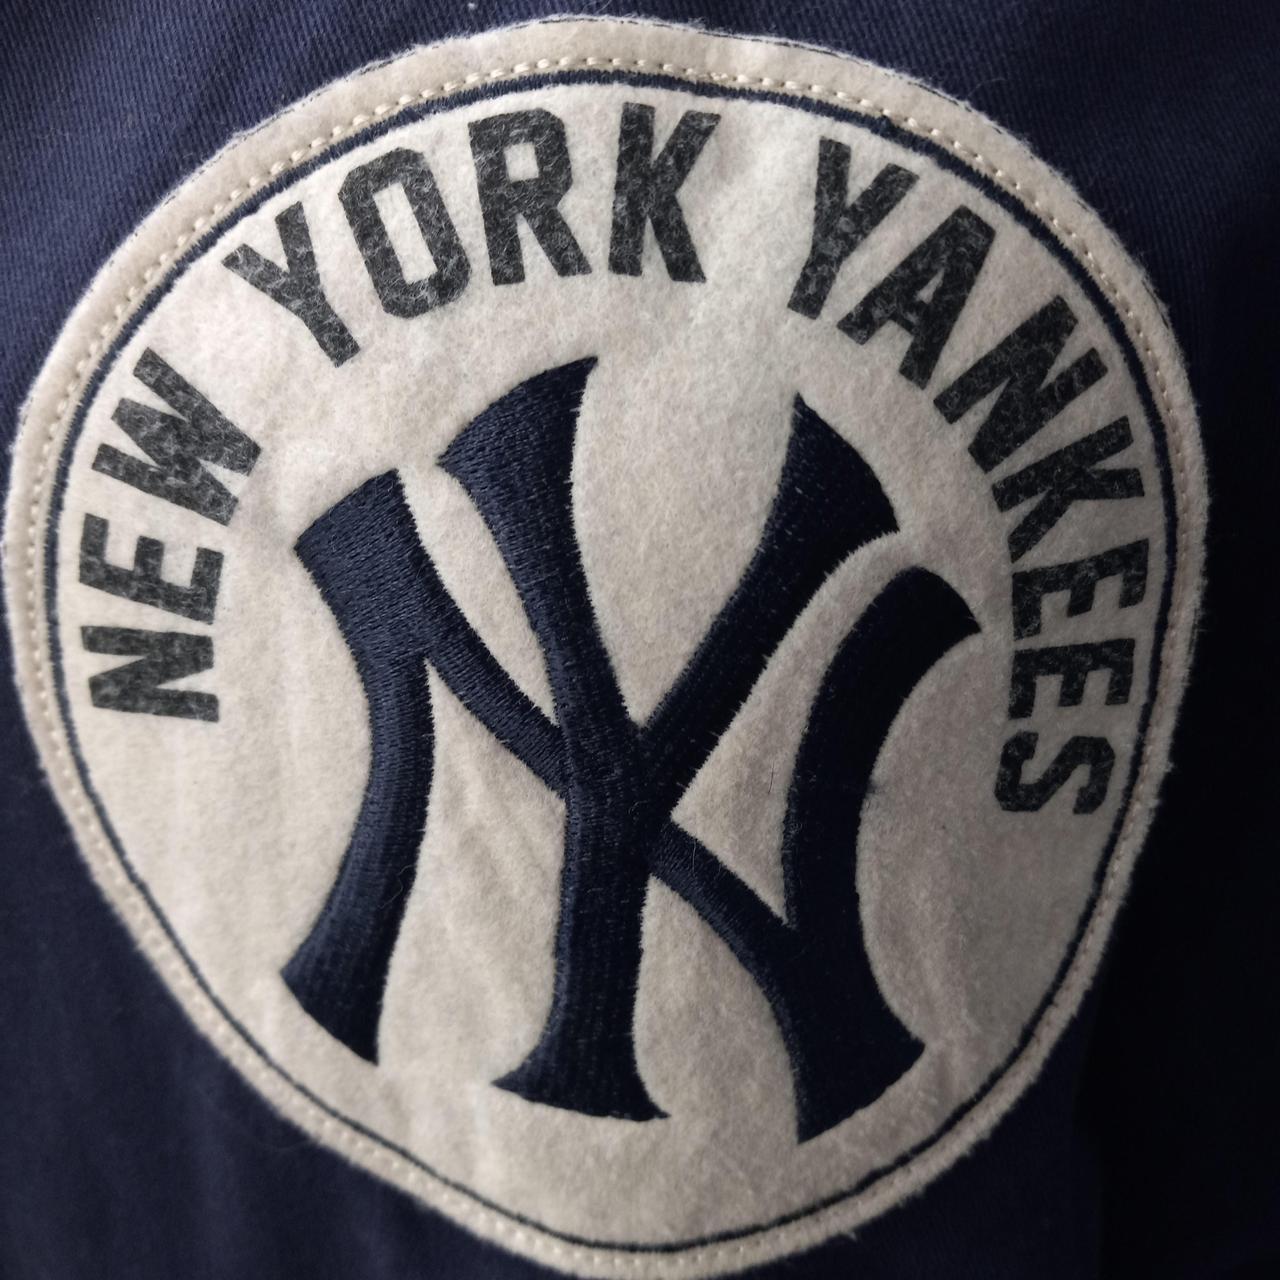 Mitchell & Ness New York Yankees Coaches Jacket XL - - Depop